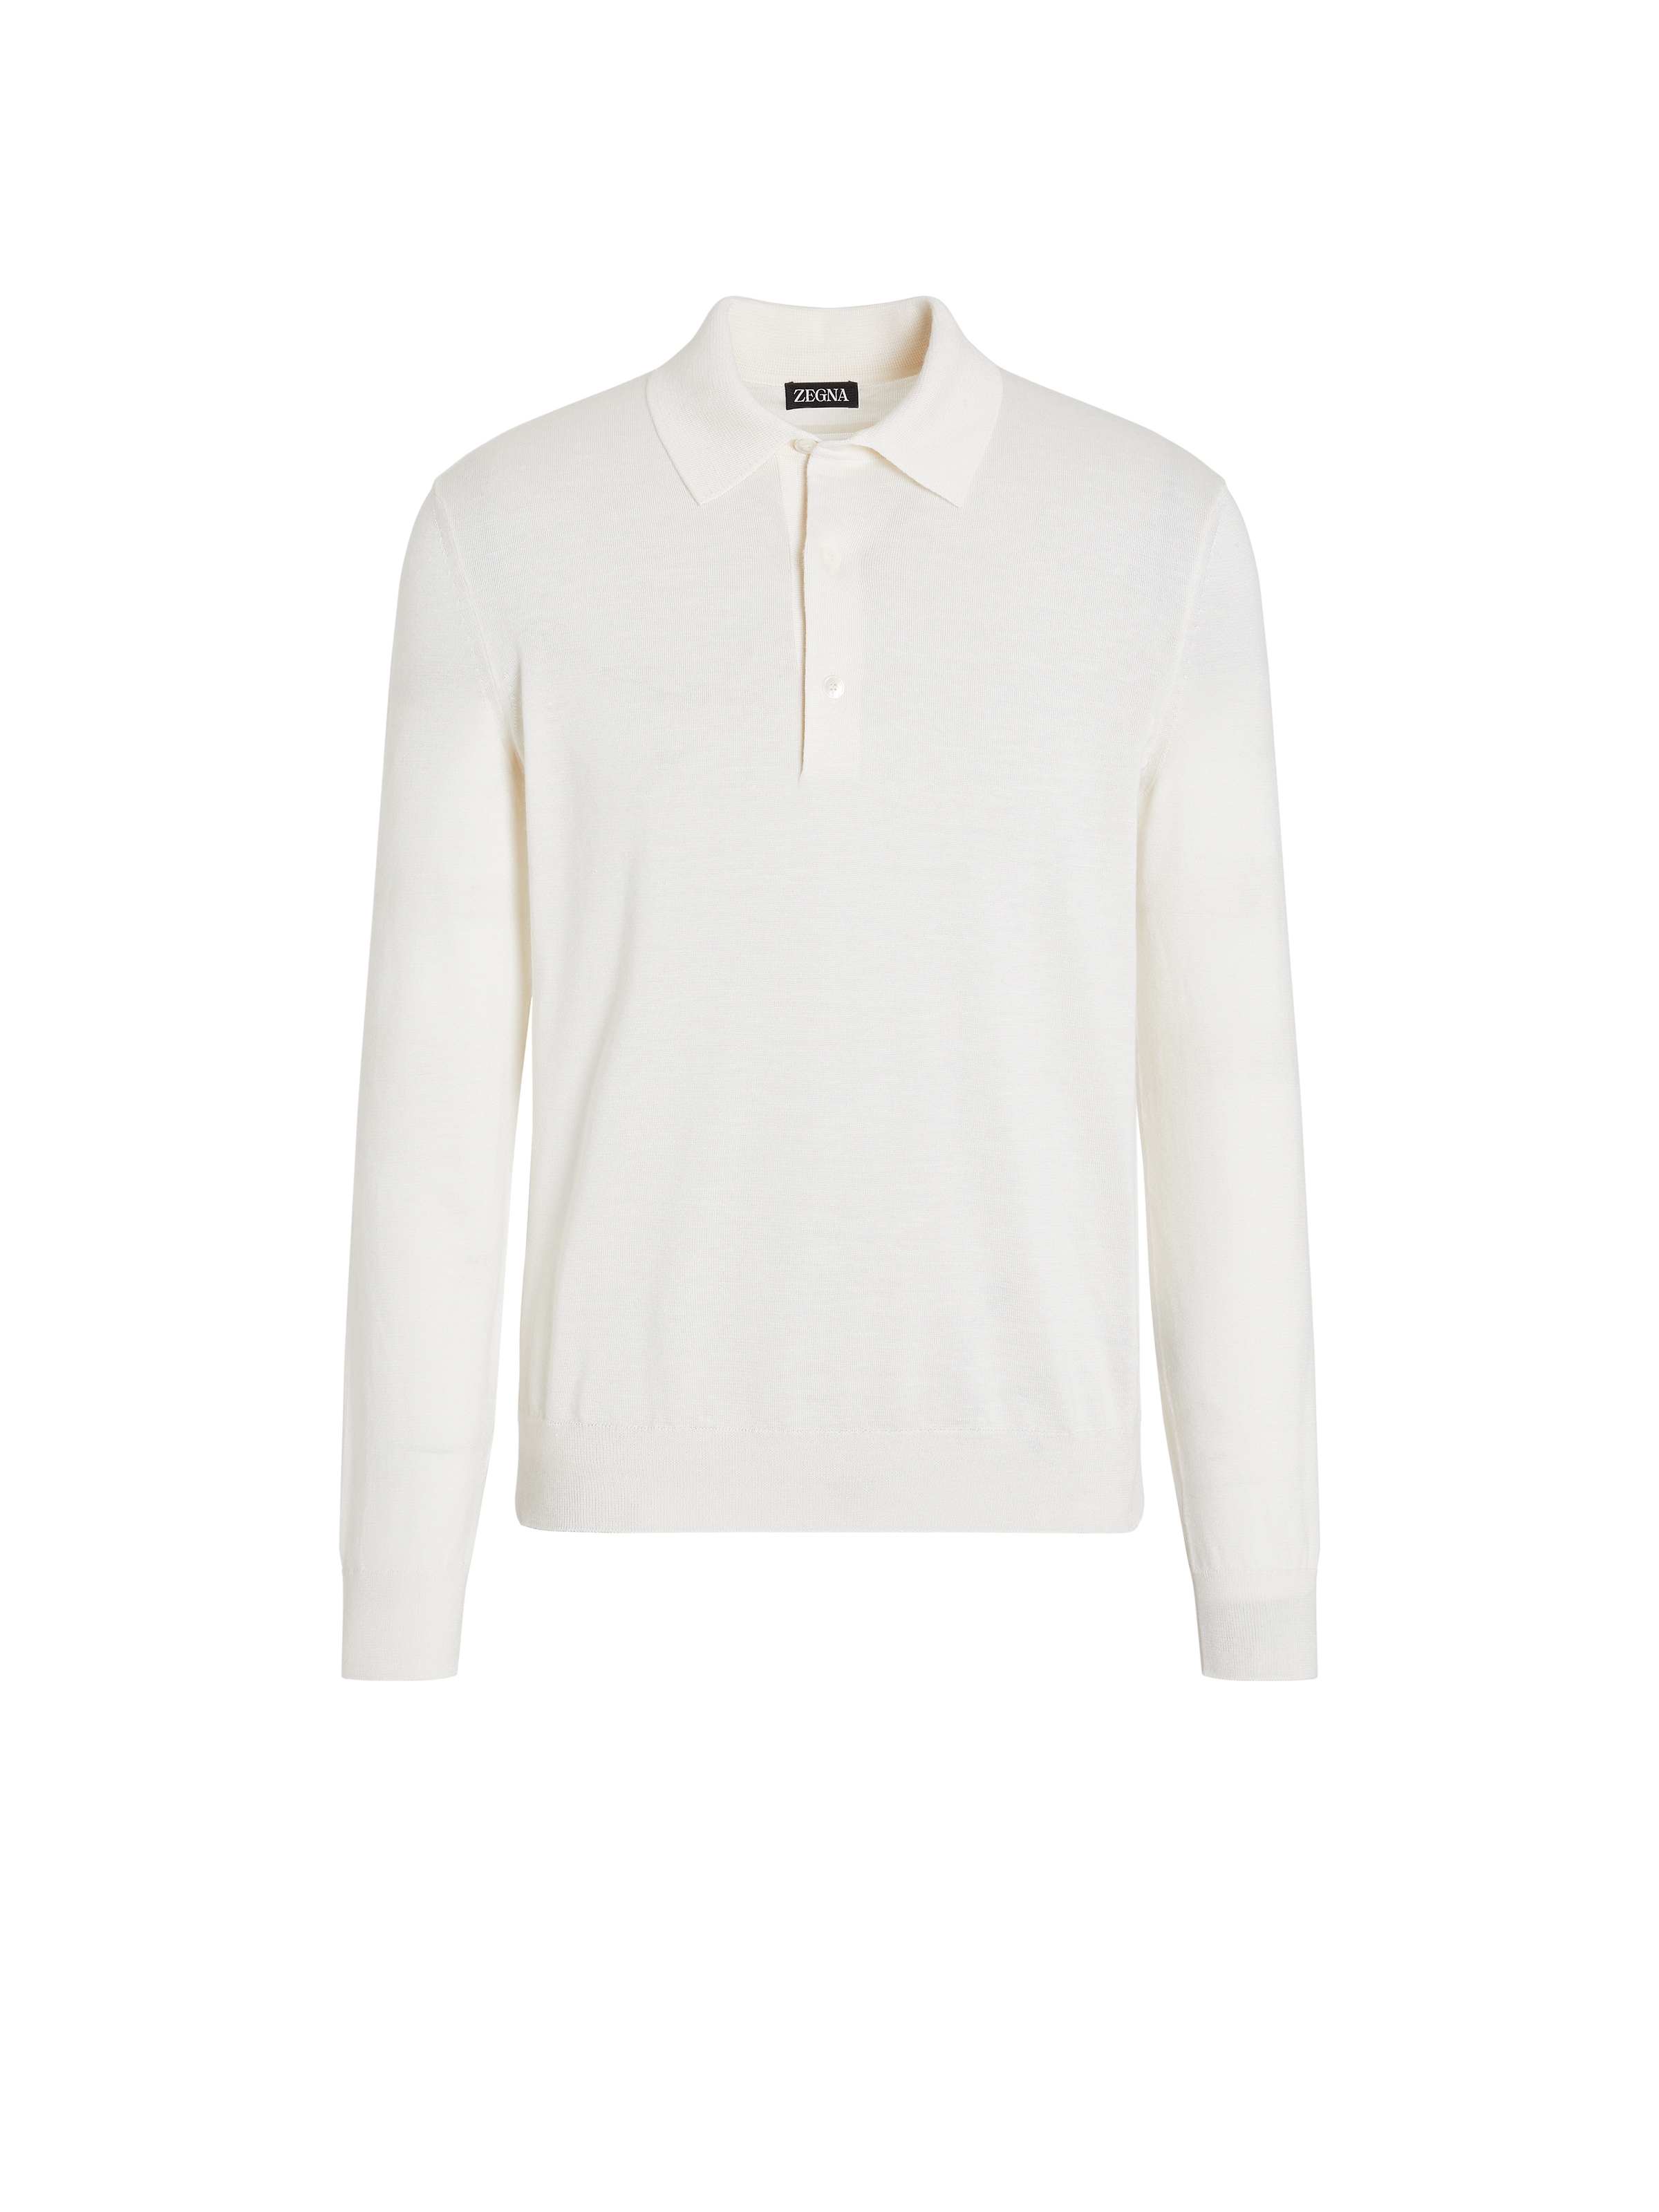 Zegna White Silk Cashmere And Linen Polo Shirt